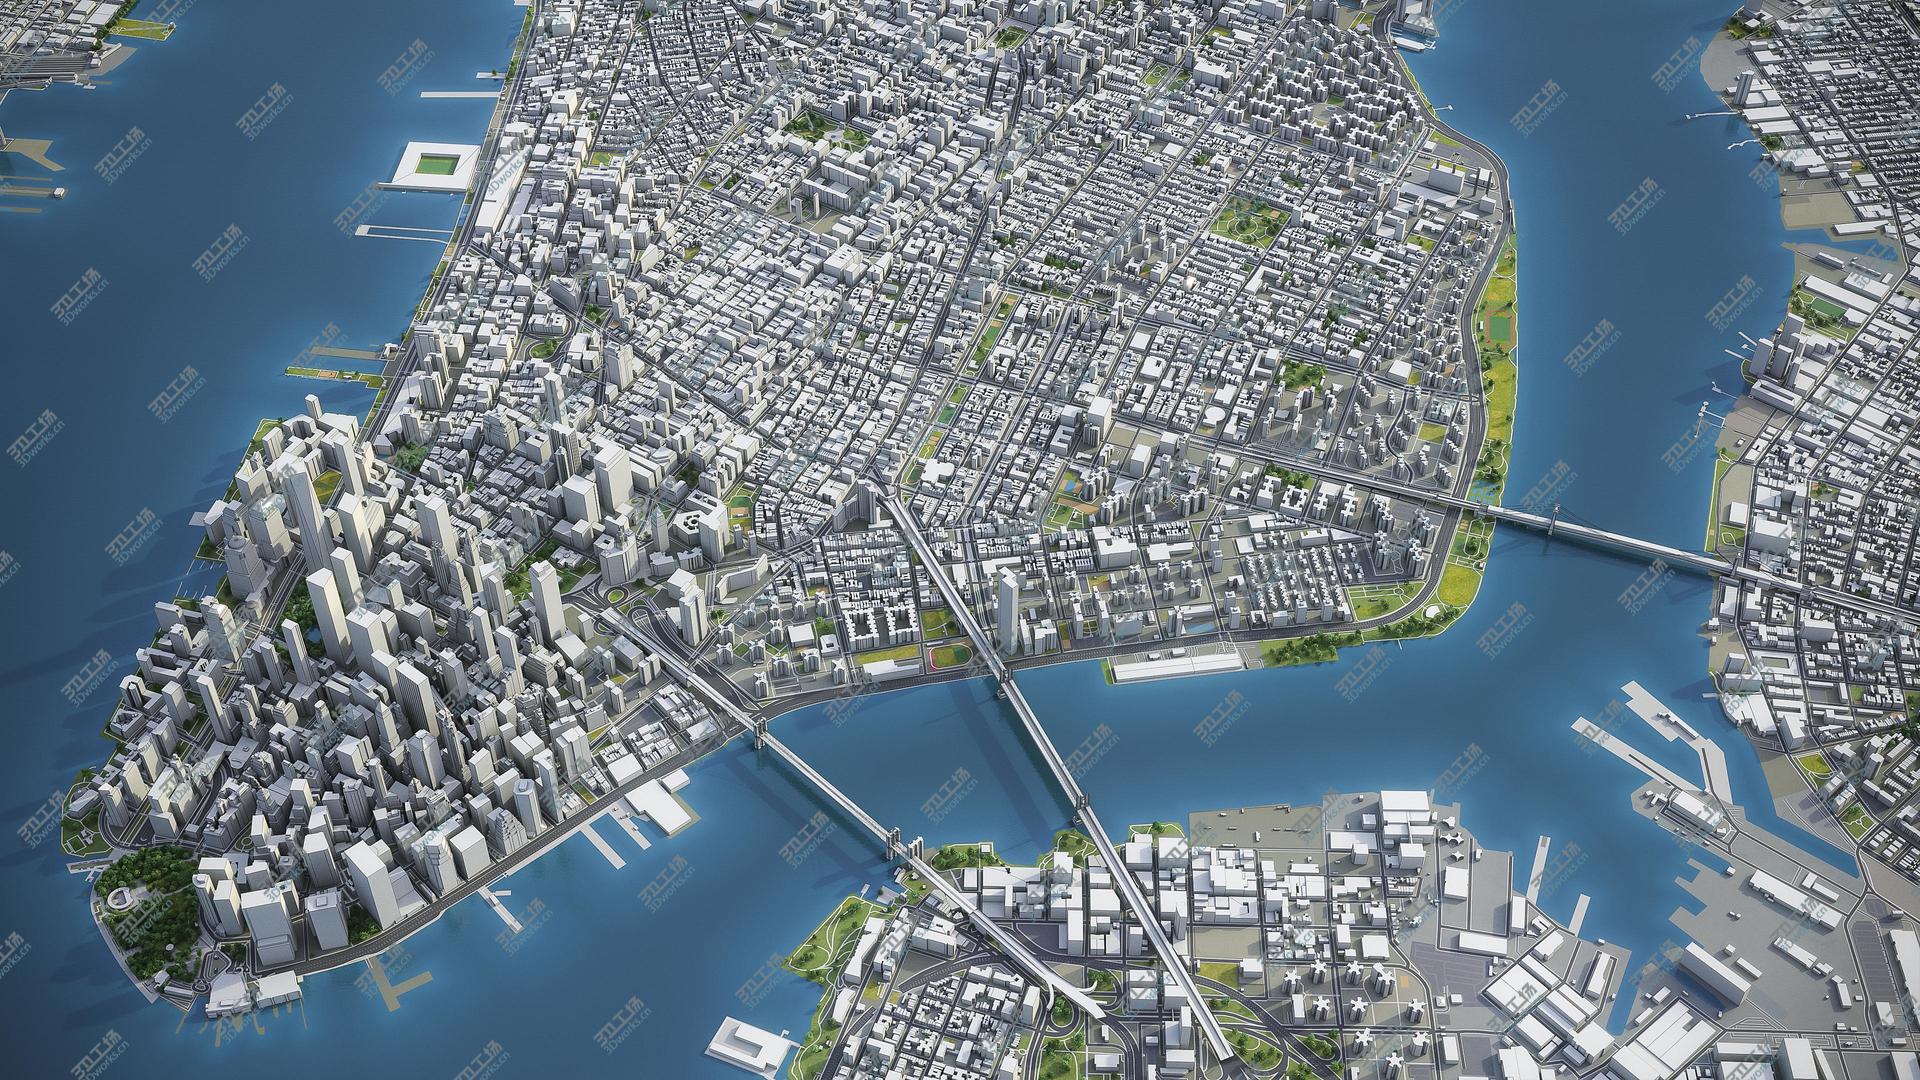 images/goods_img/20210114/3D model New York - city and surroundings/3.jpg